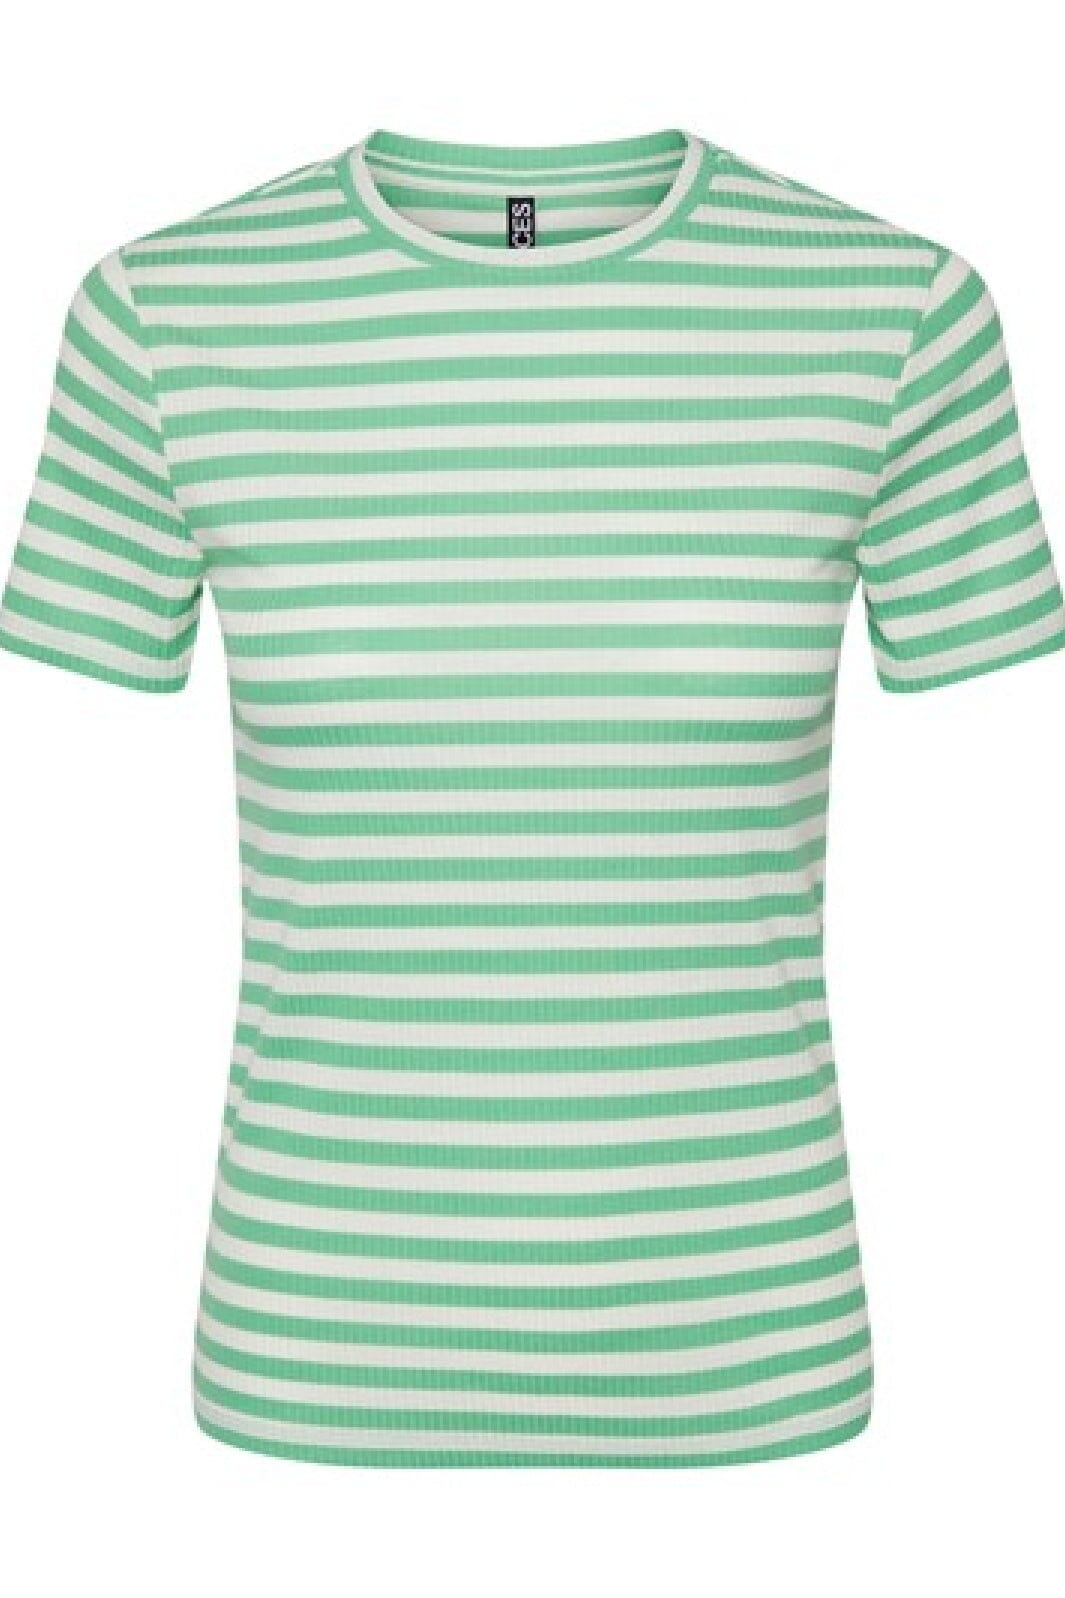 Pieces - Pcruka Ss Top Bc - Absinthe Green T-shirts 